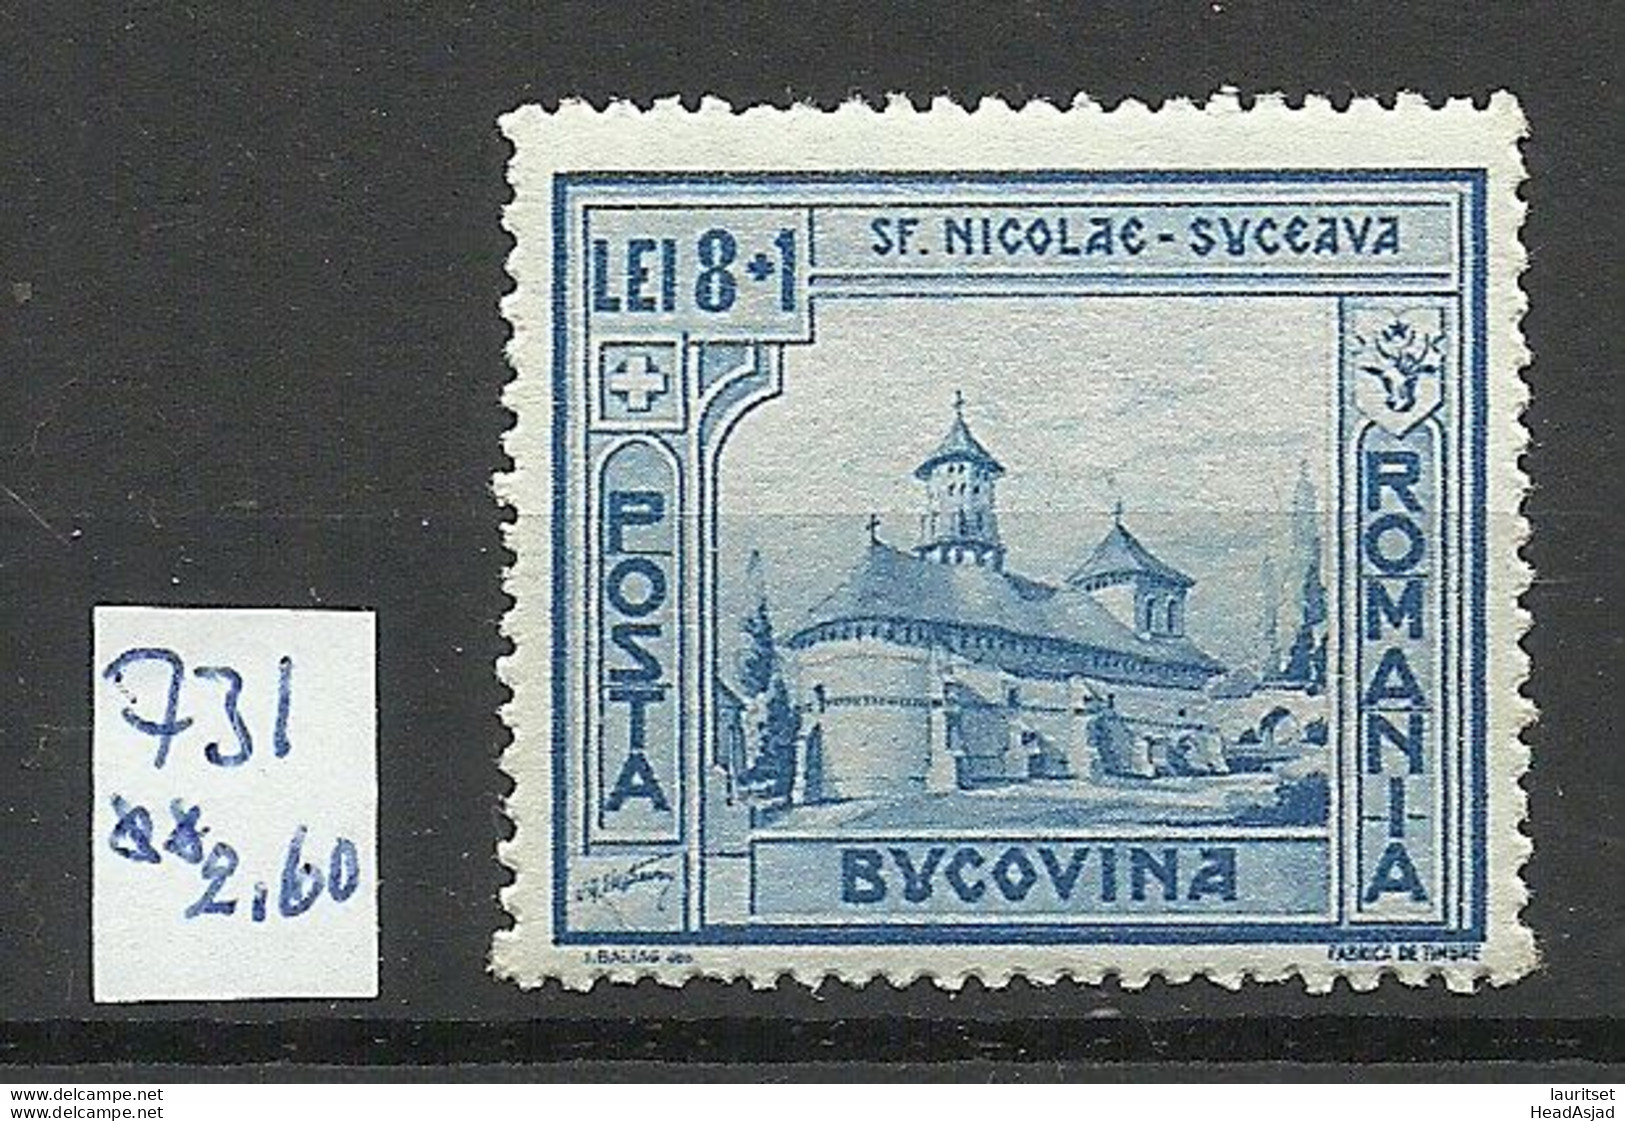 ROMANIA Rumänien 1941 Michel 738 Bucovina Arcitecture MNH - Nuevos